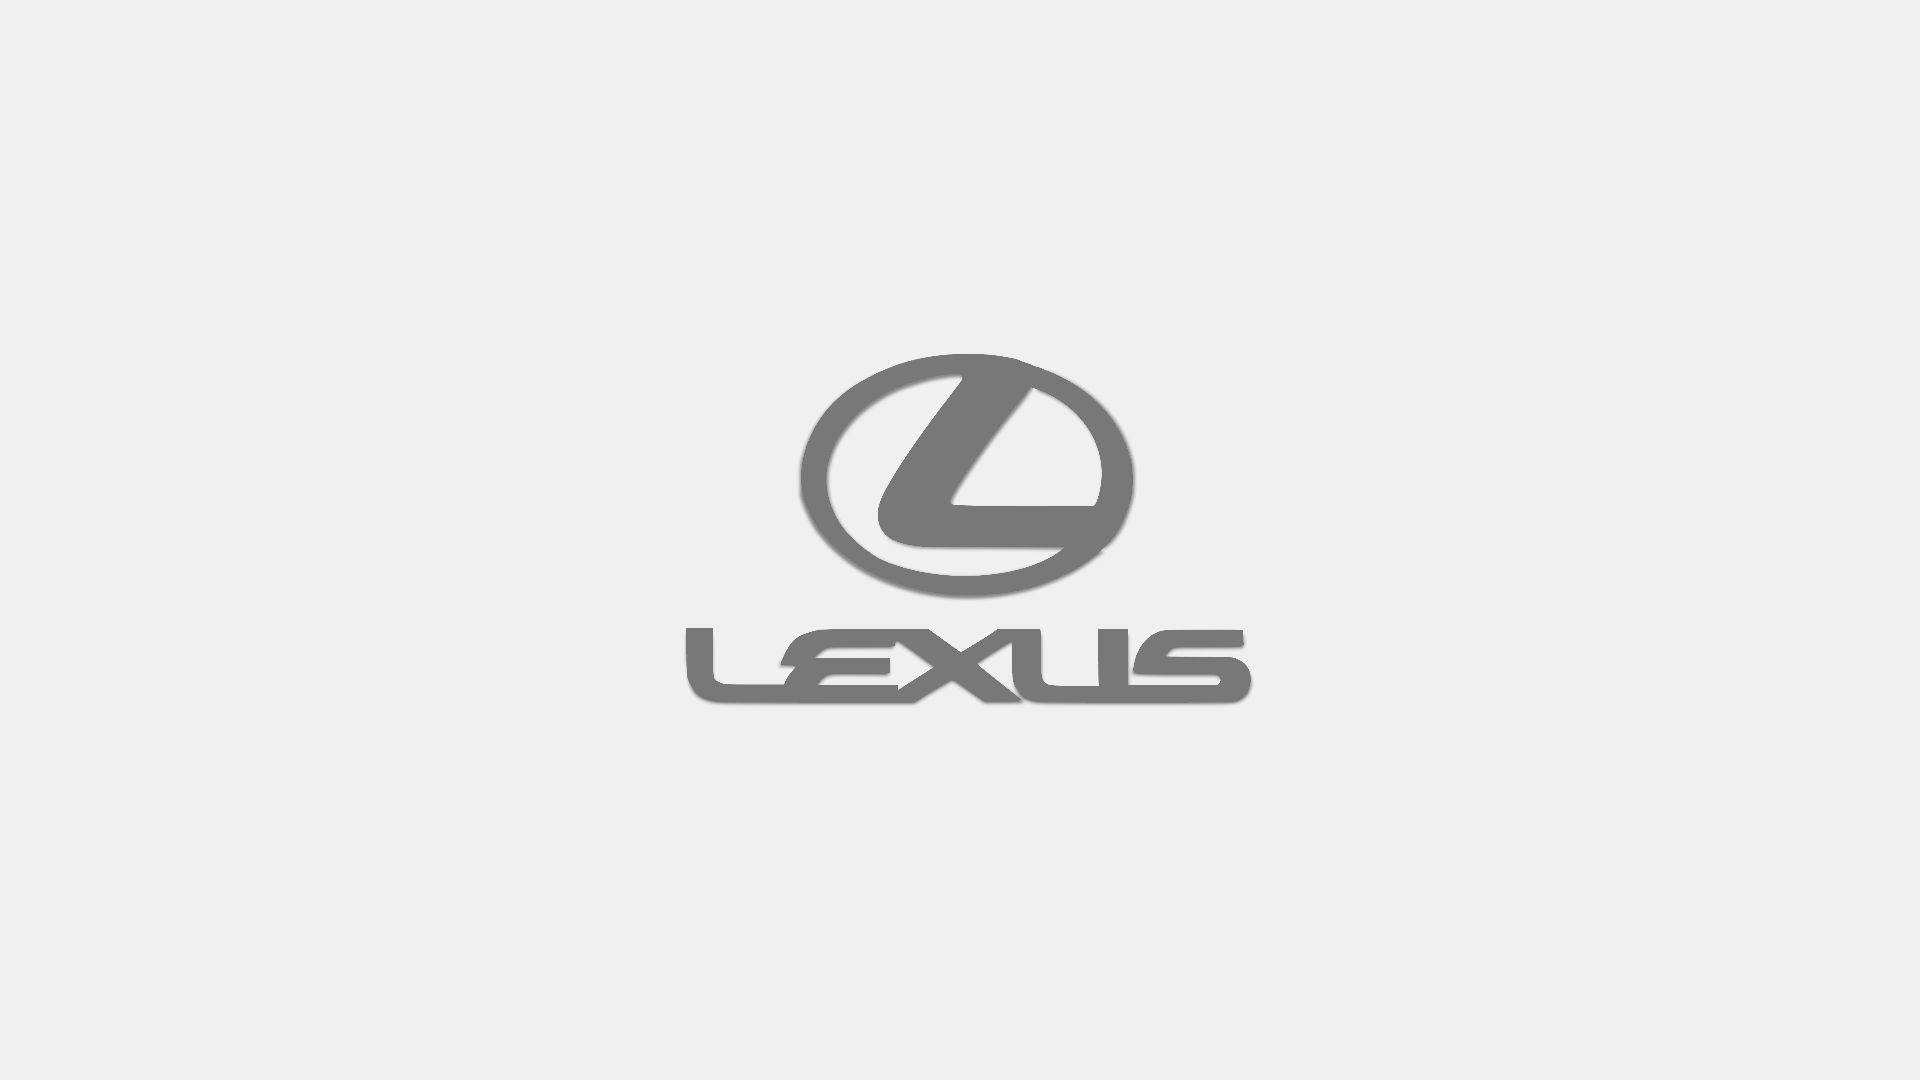 Logotipo Lexus Papel de Parede